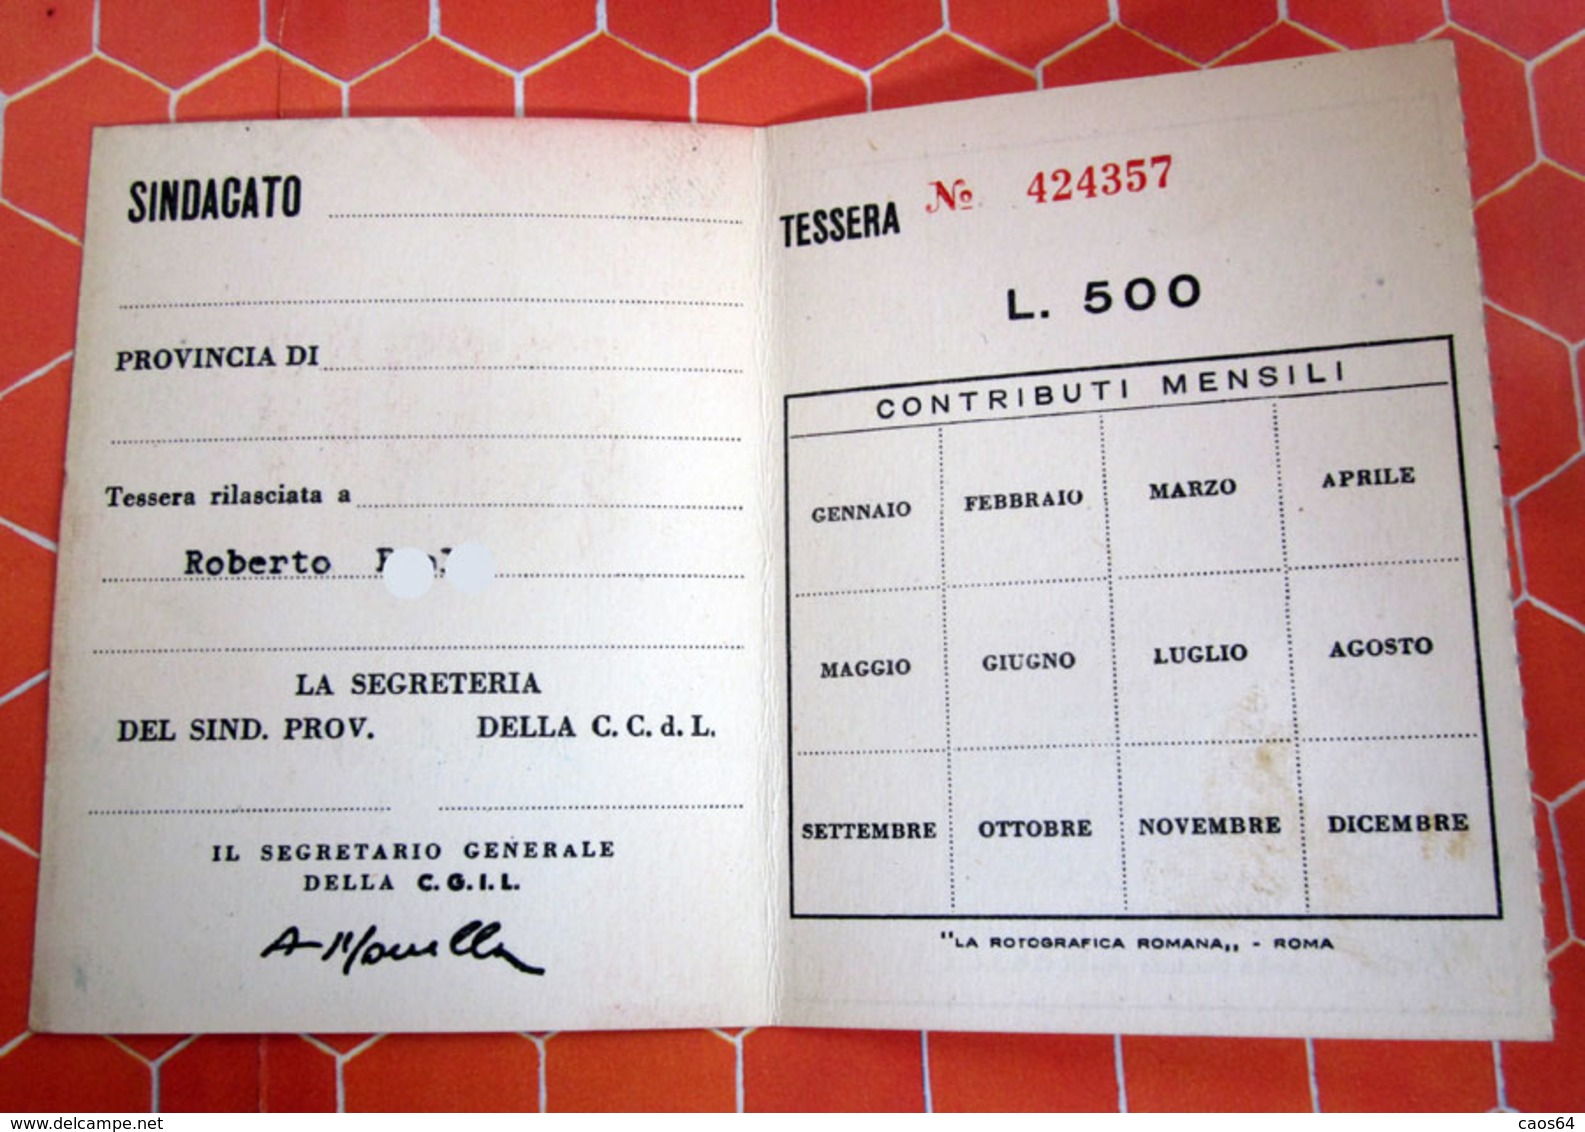 TESSERA CGIL 1965 TORINO - Membership Cards